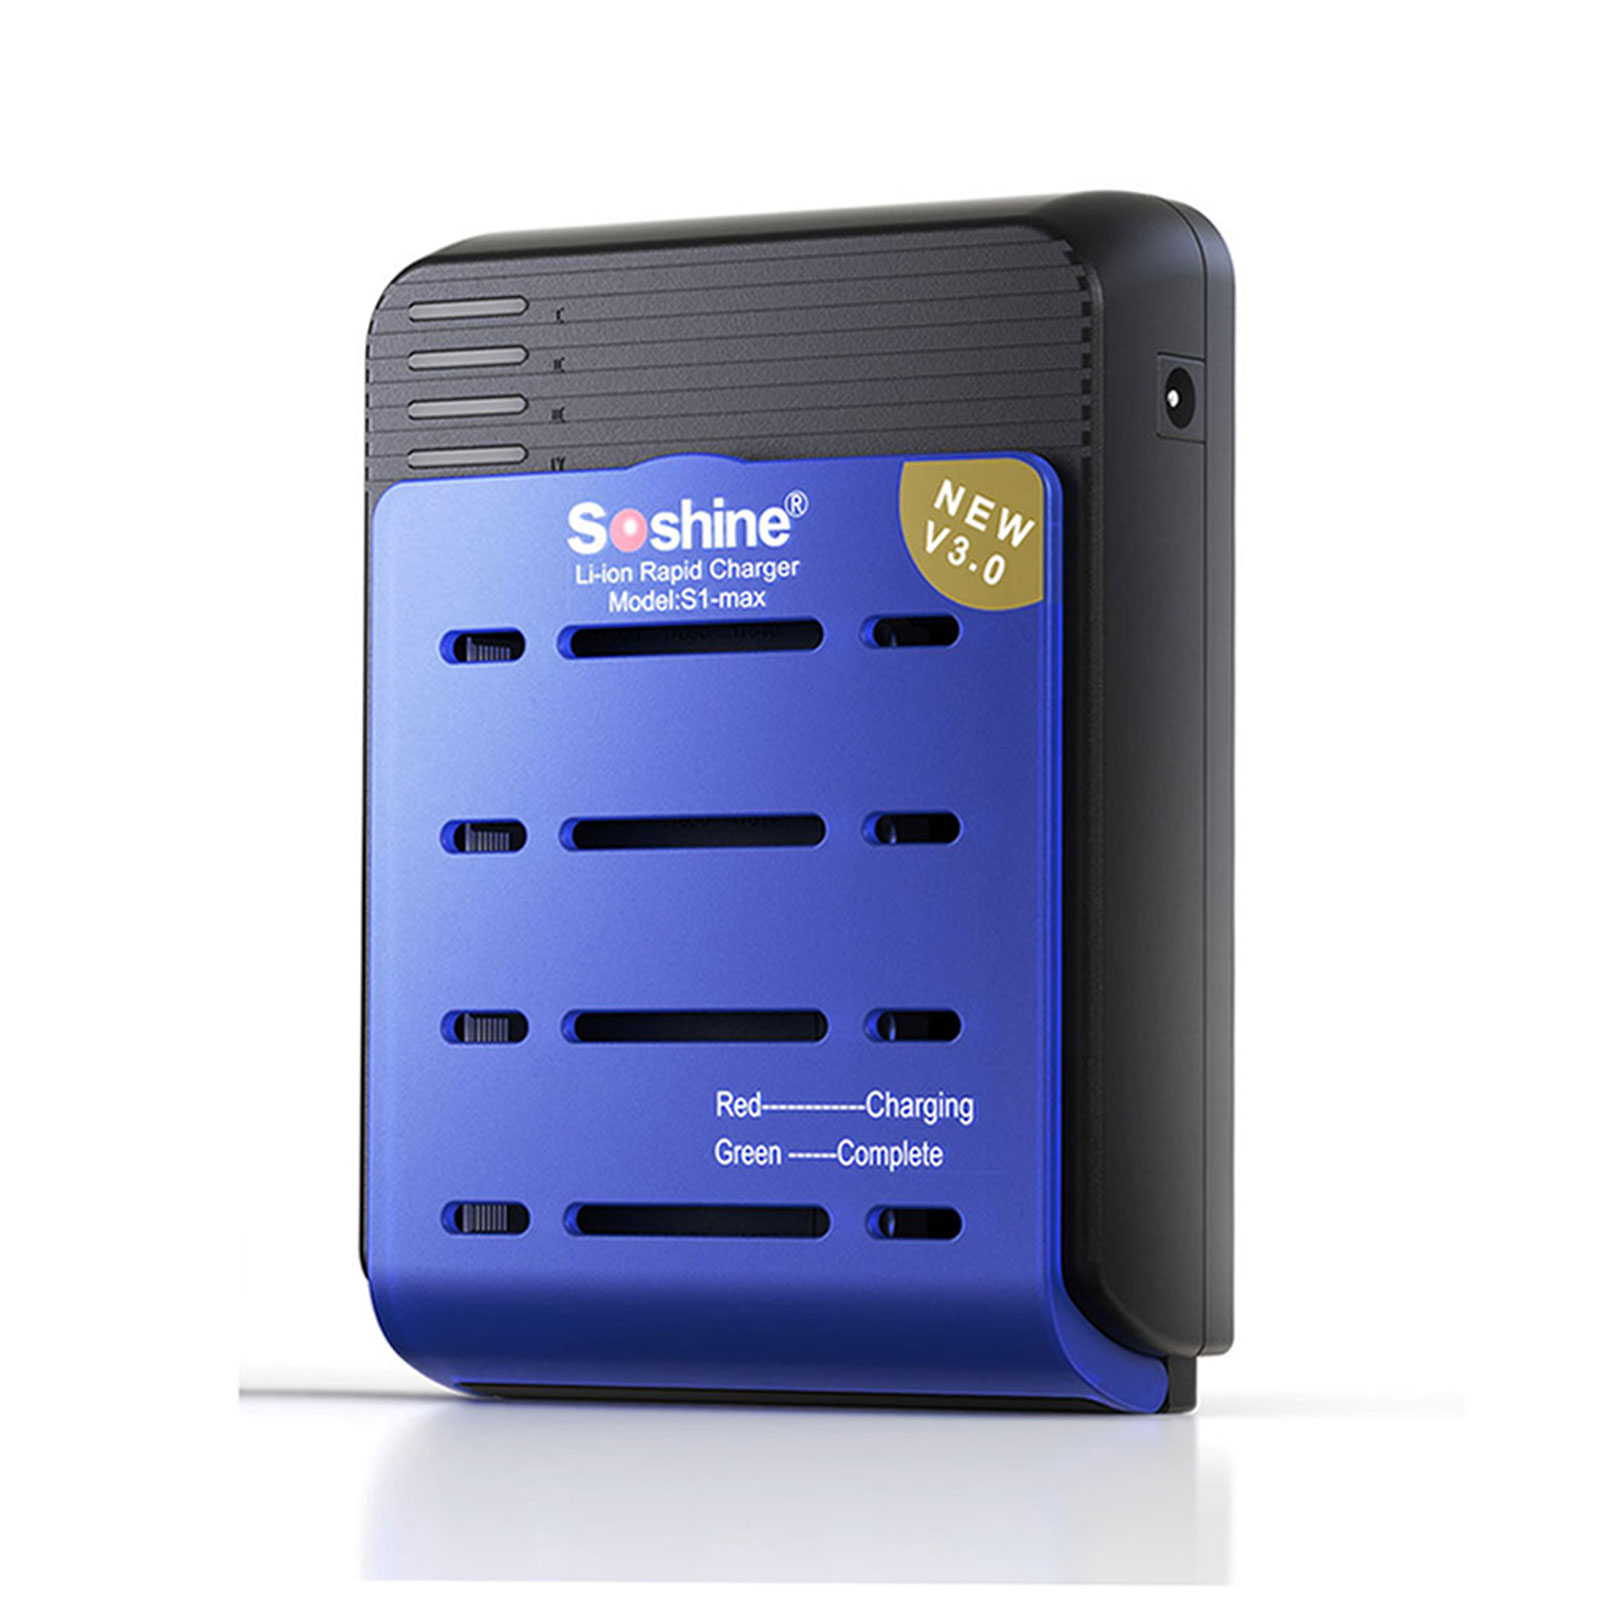 Soshine Speedy Smart Charger for 18650 17500 18500 17650 Li-Ion Batteries |S1